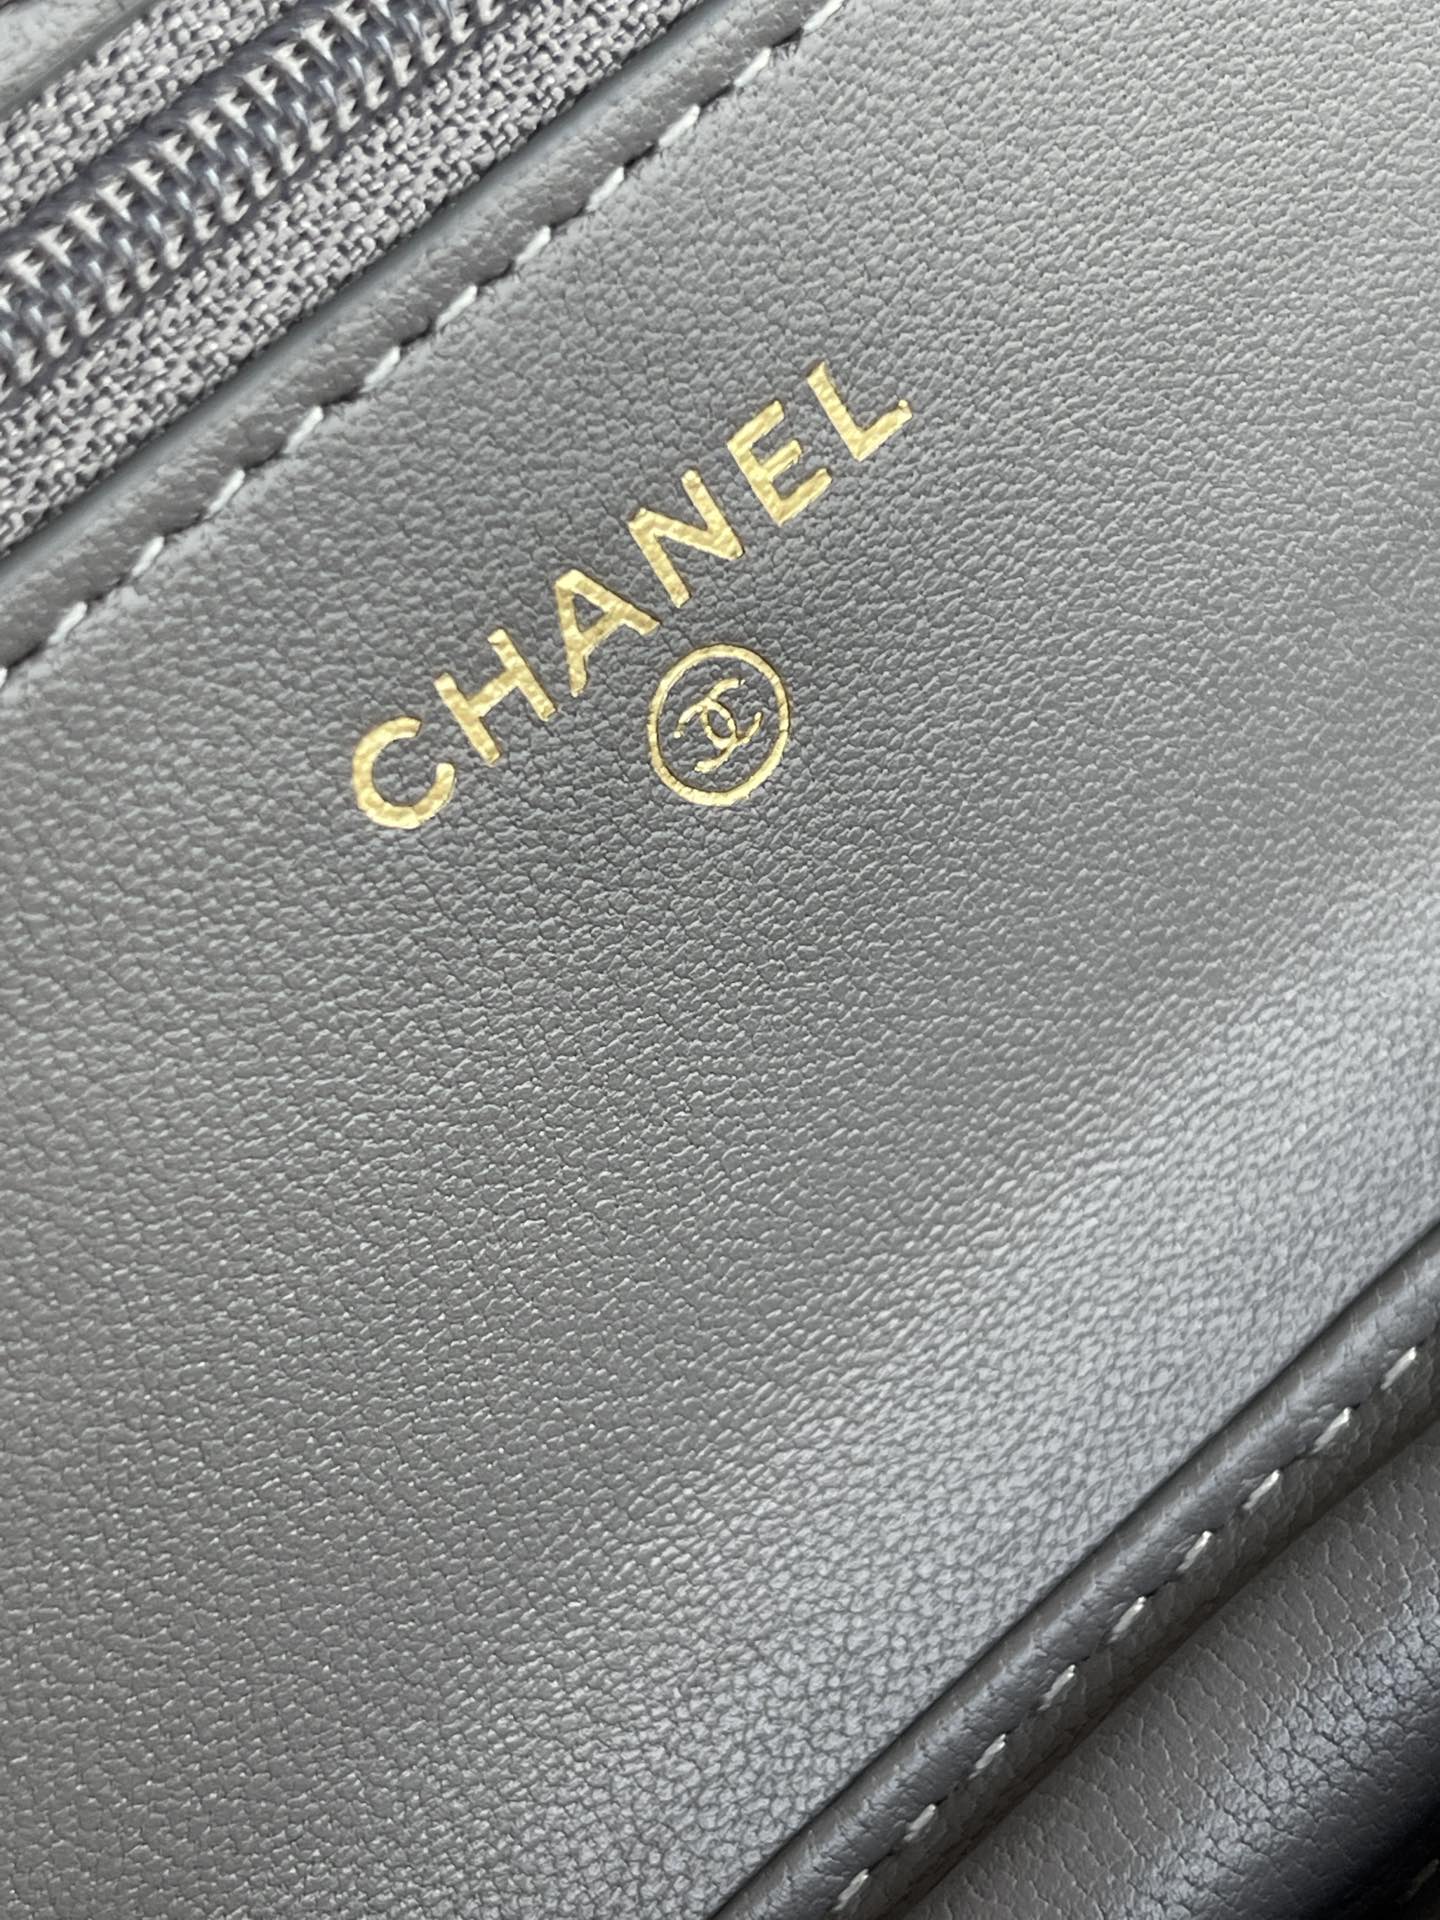 品牌Chanel型号:A简介:原单质